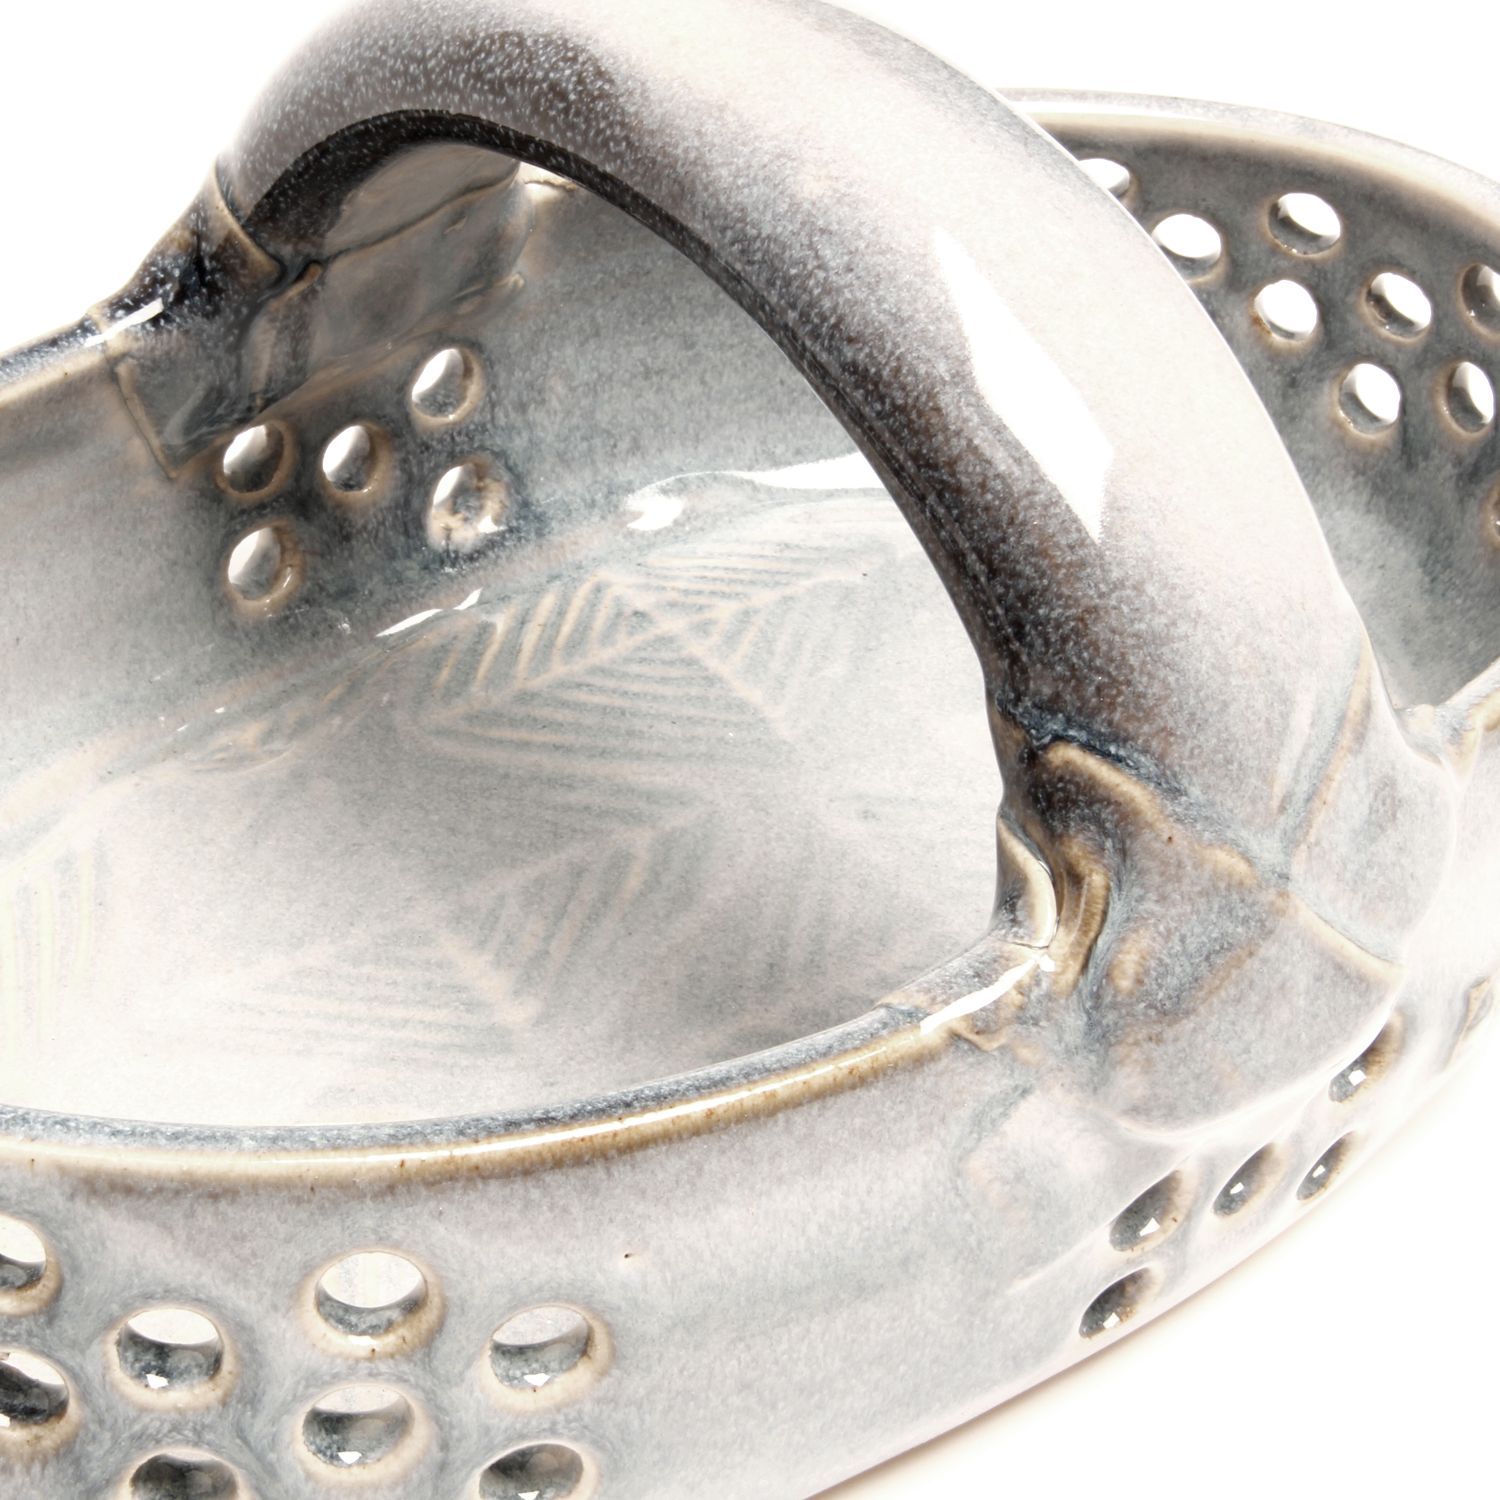 Teresa Dunlop: Pierced Basket Product Image 2 of 2